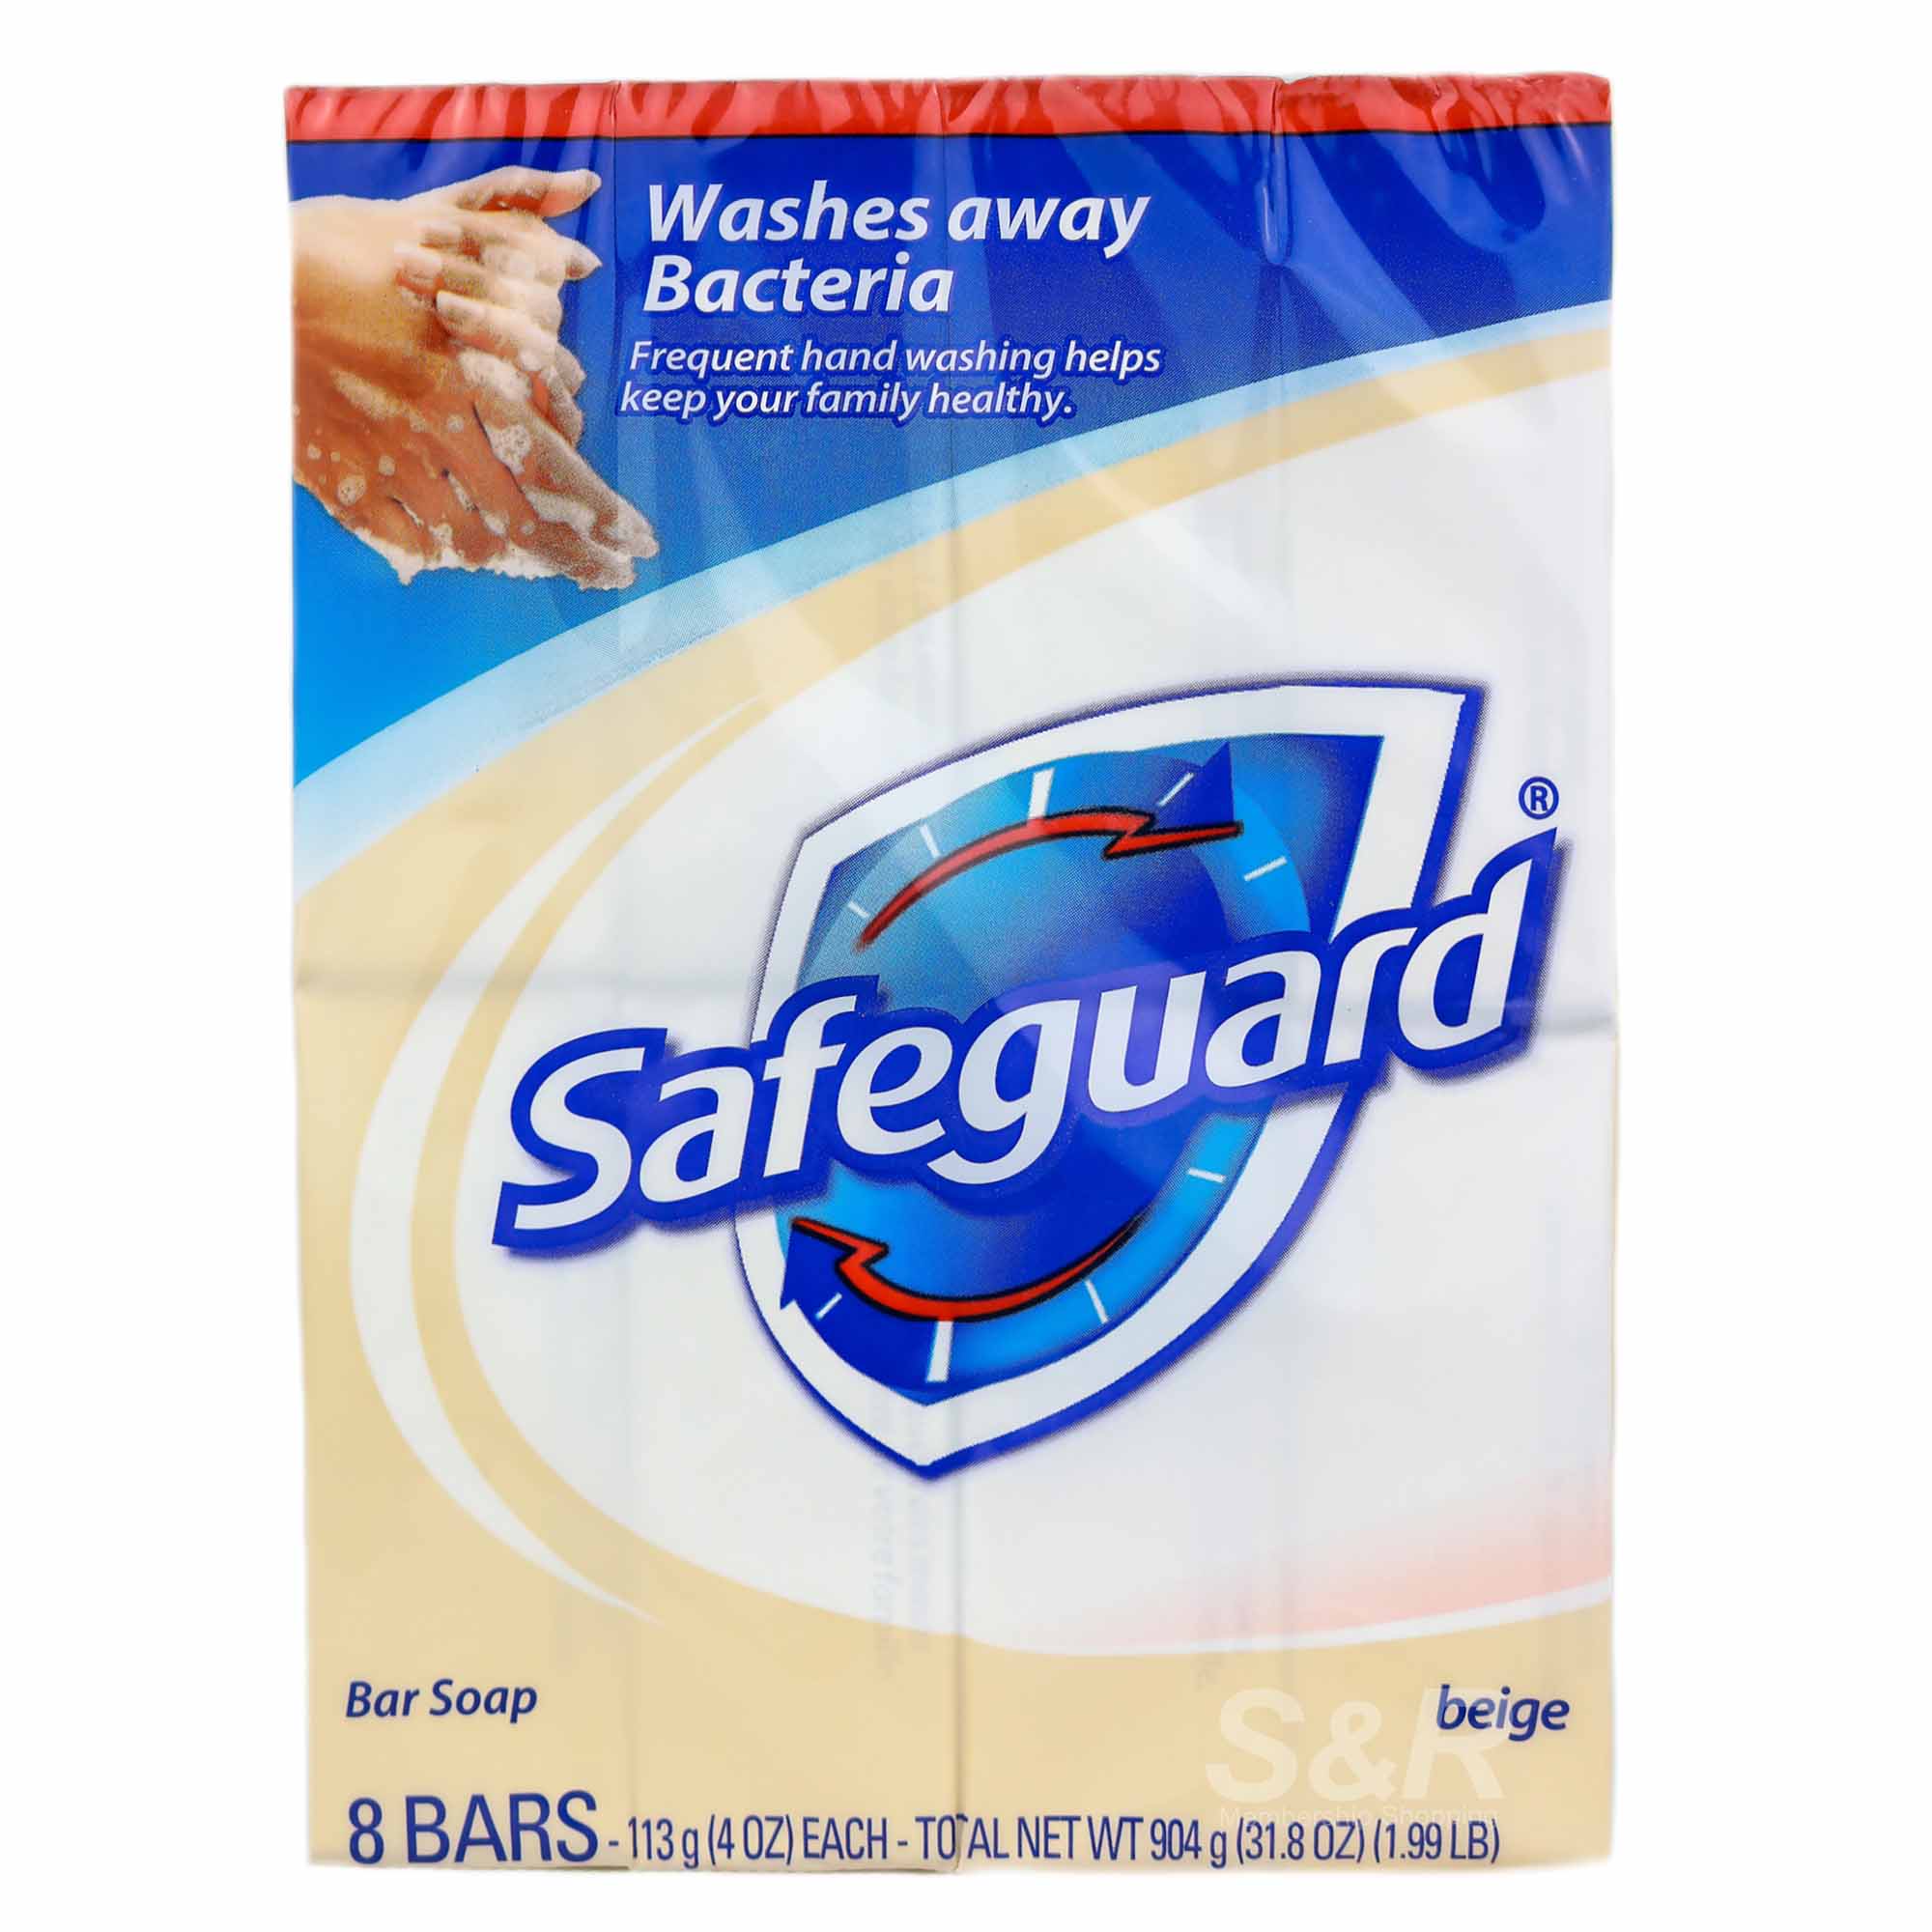 Safeguard Beige Bar Soap 8 bars